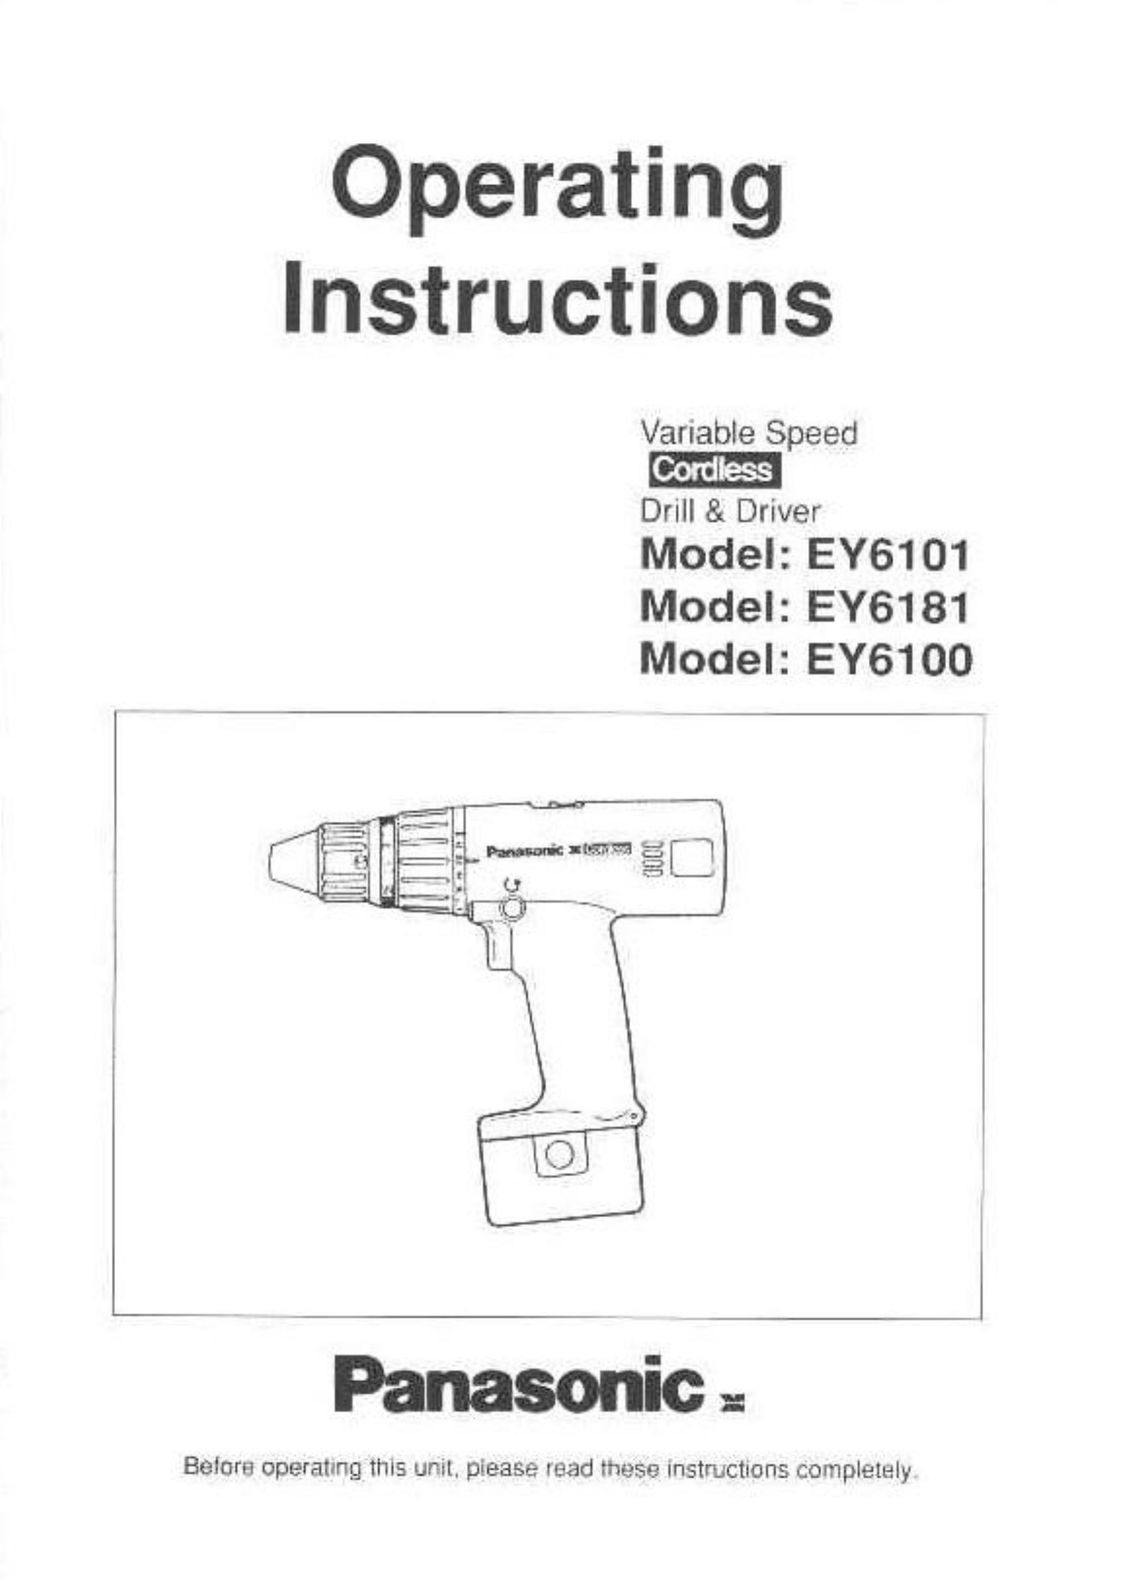 Panasonic EY6181 Cordless Drill User Manual